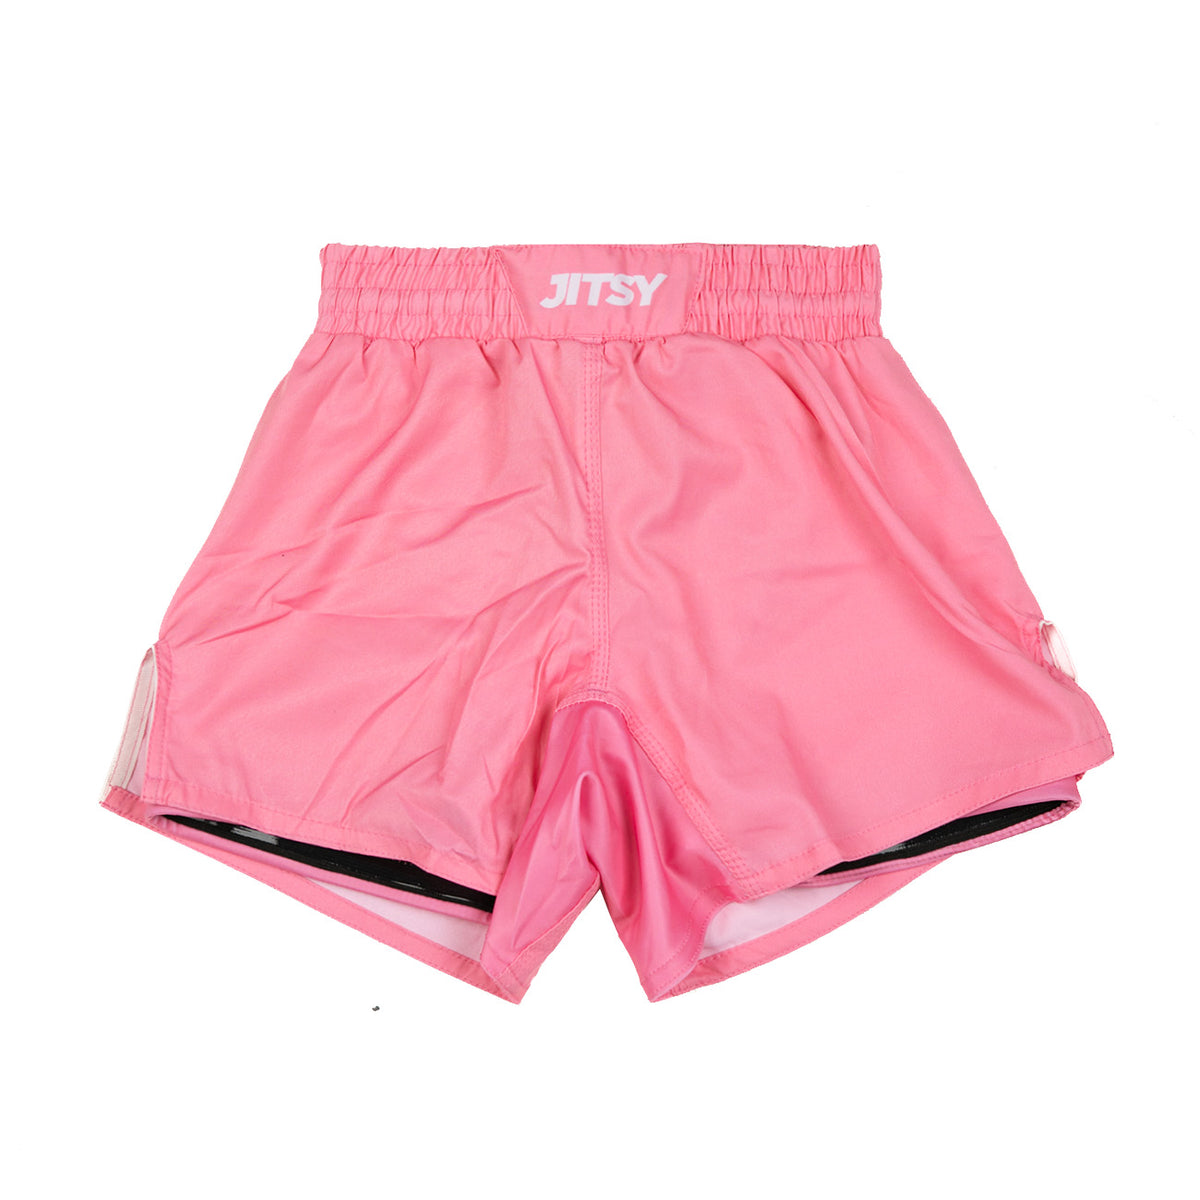 Shorts / Spats - Women